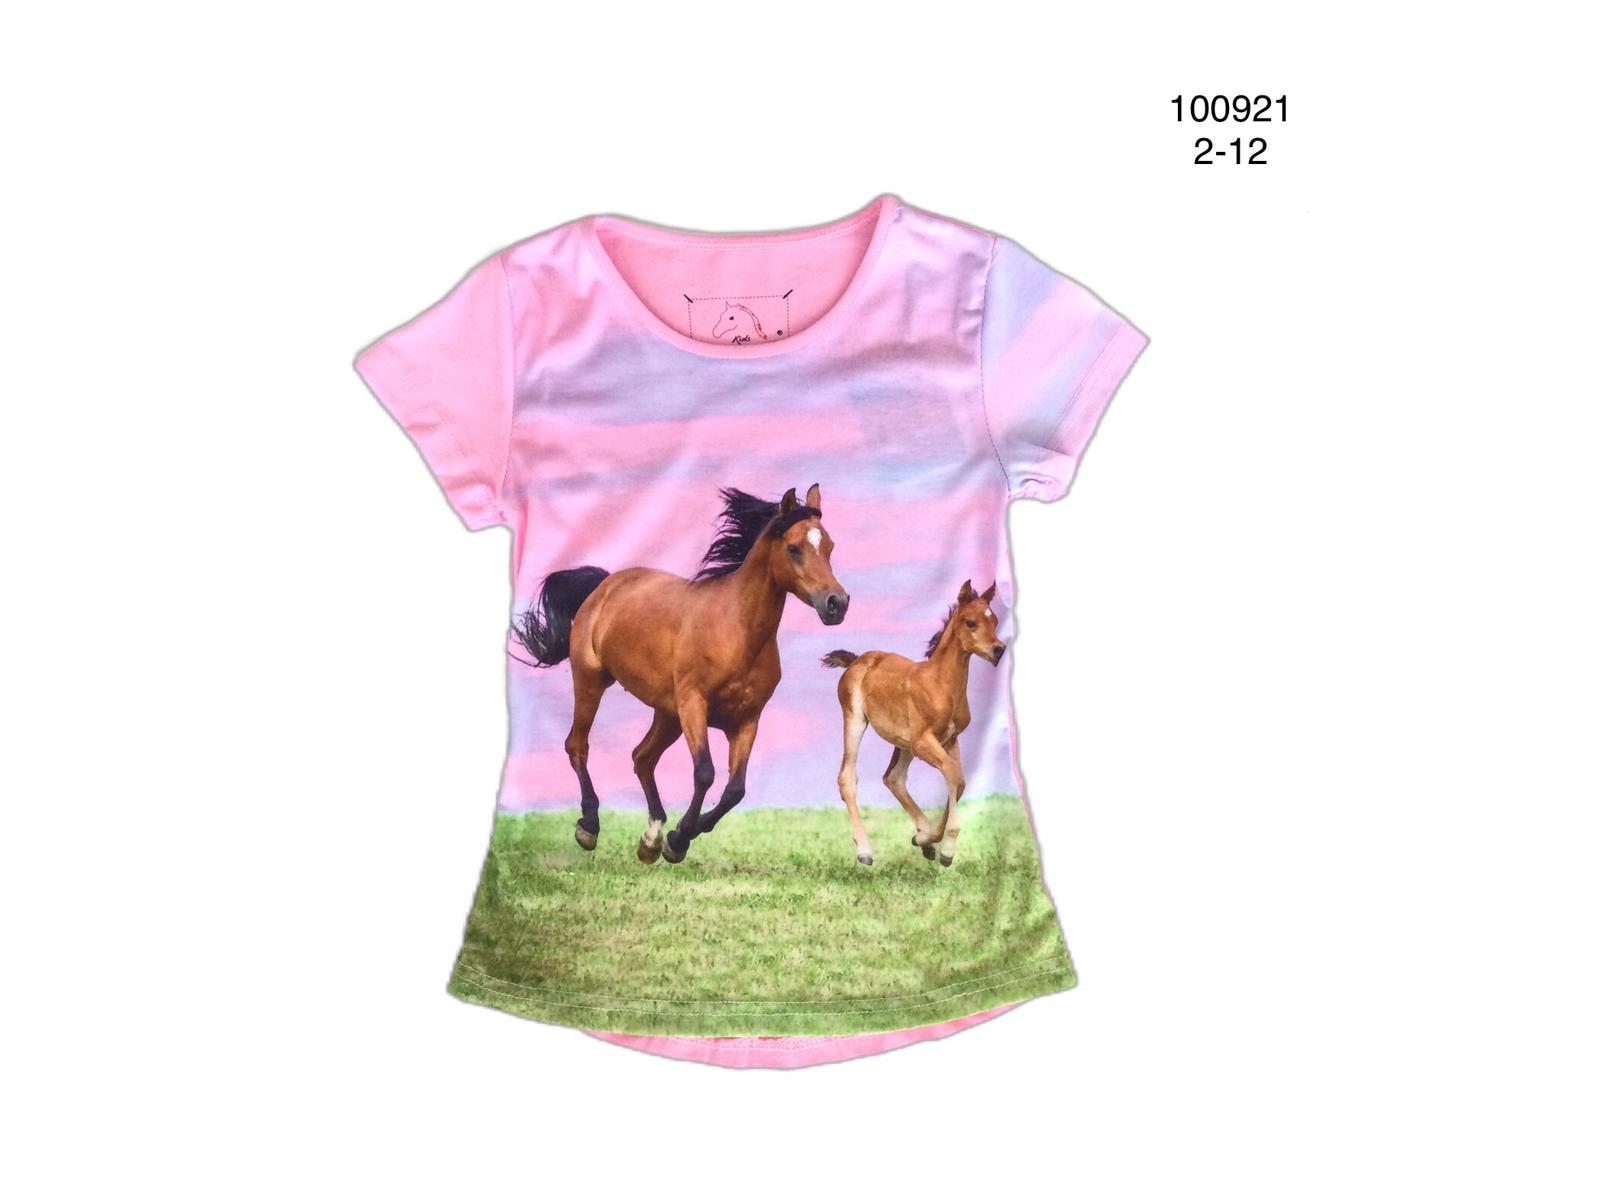 Chemise rose avec cheval et poulain